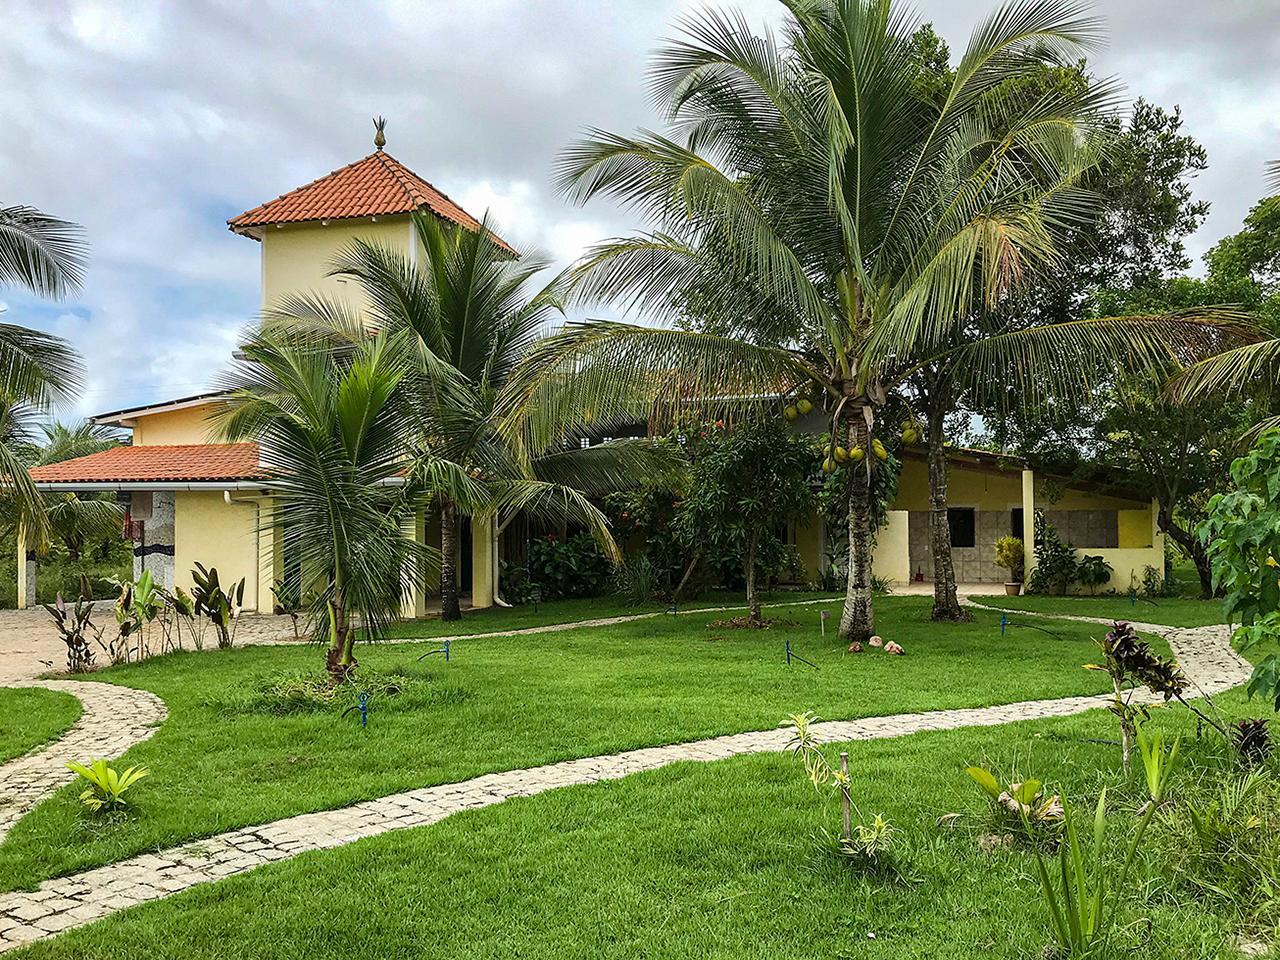 Farmhaus "Fazenda Eco Jardim" Ferienhaus in Südamerika